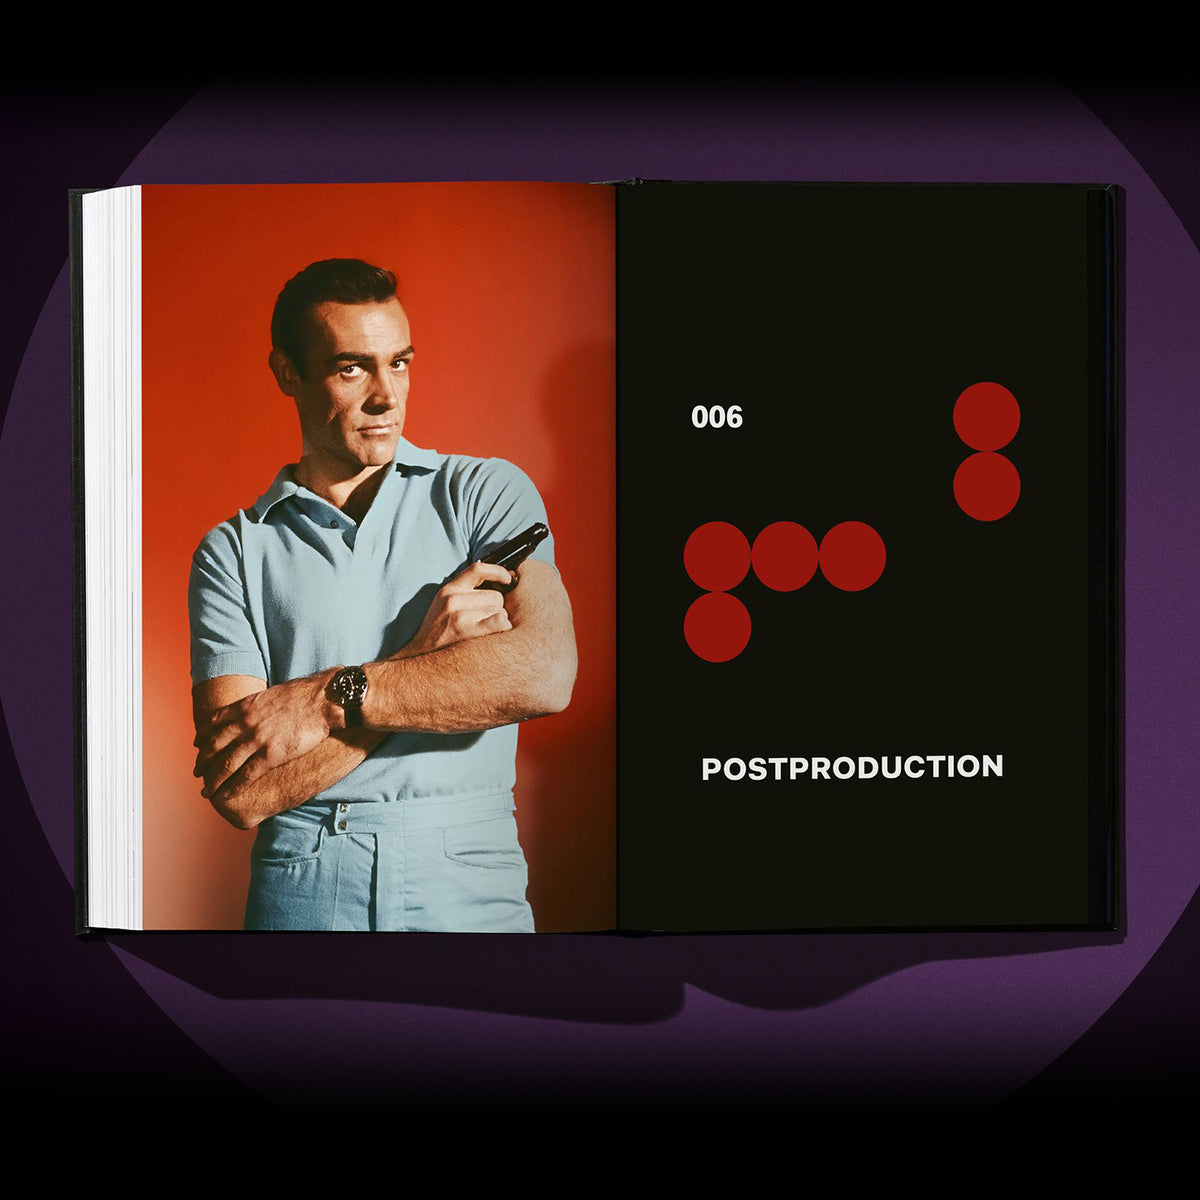 James Bond Dr. No Archive Book - Publicity Portrait Numbered Art Edition - By Taschen